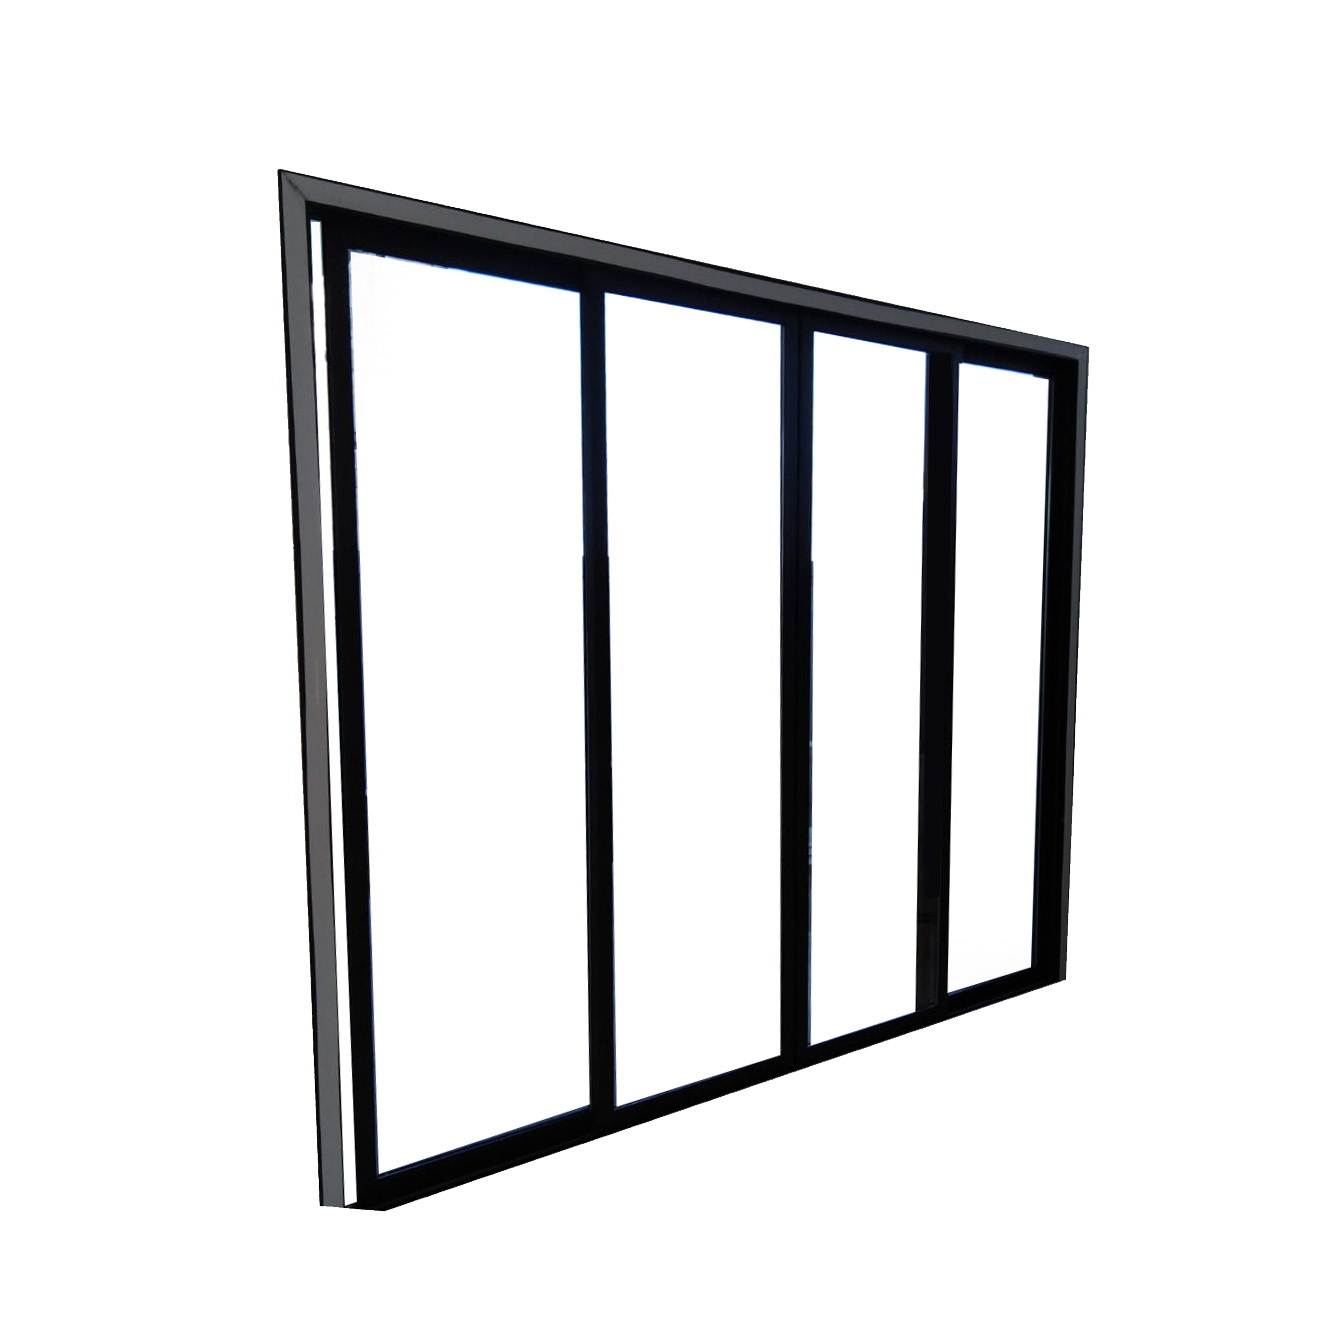 Buy Black Border Sliding Glass Door Online | Manufacturing Production Services | Qetaat.com